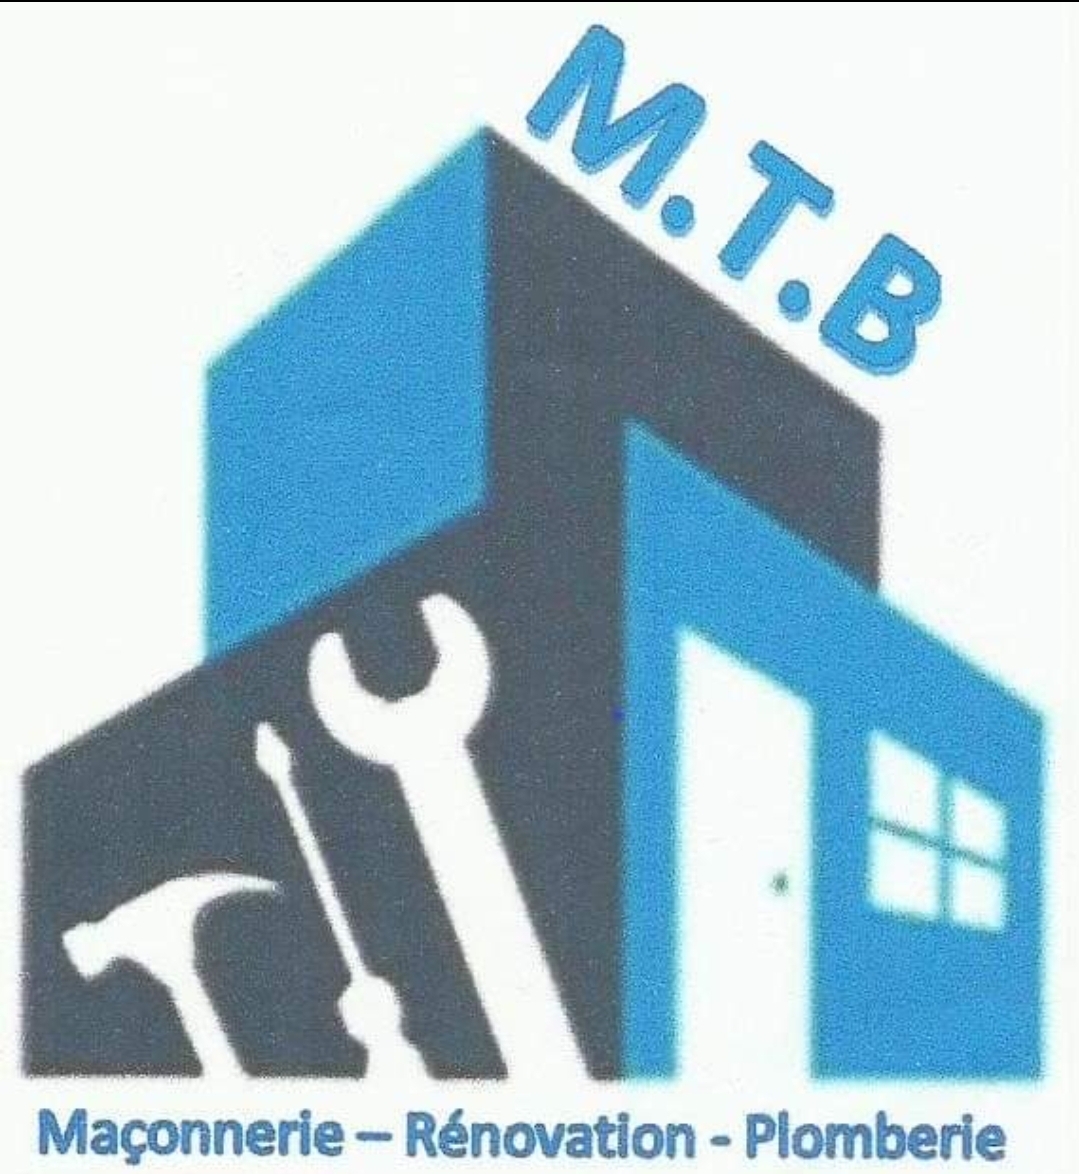 Mtb renovation